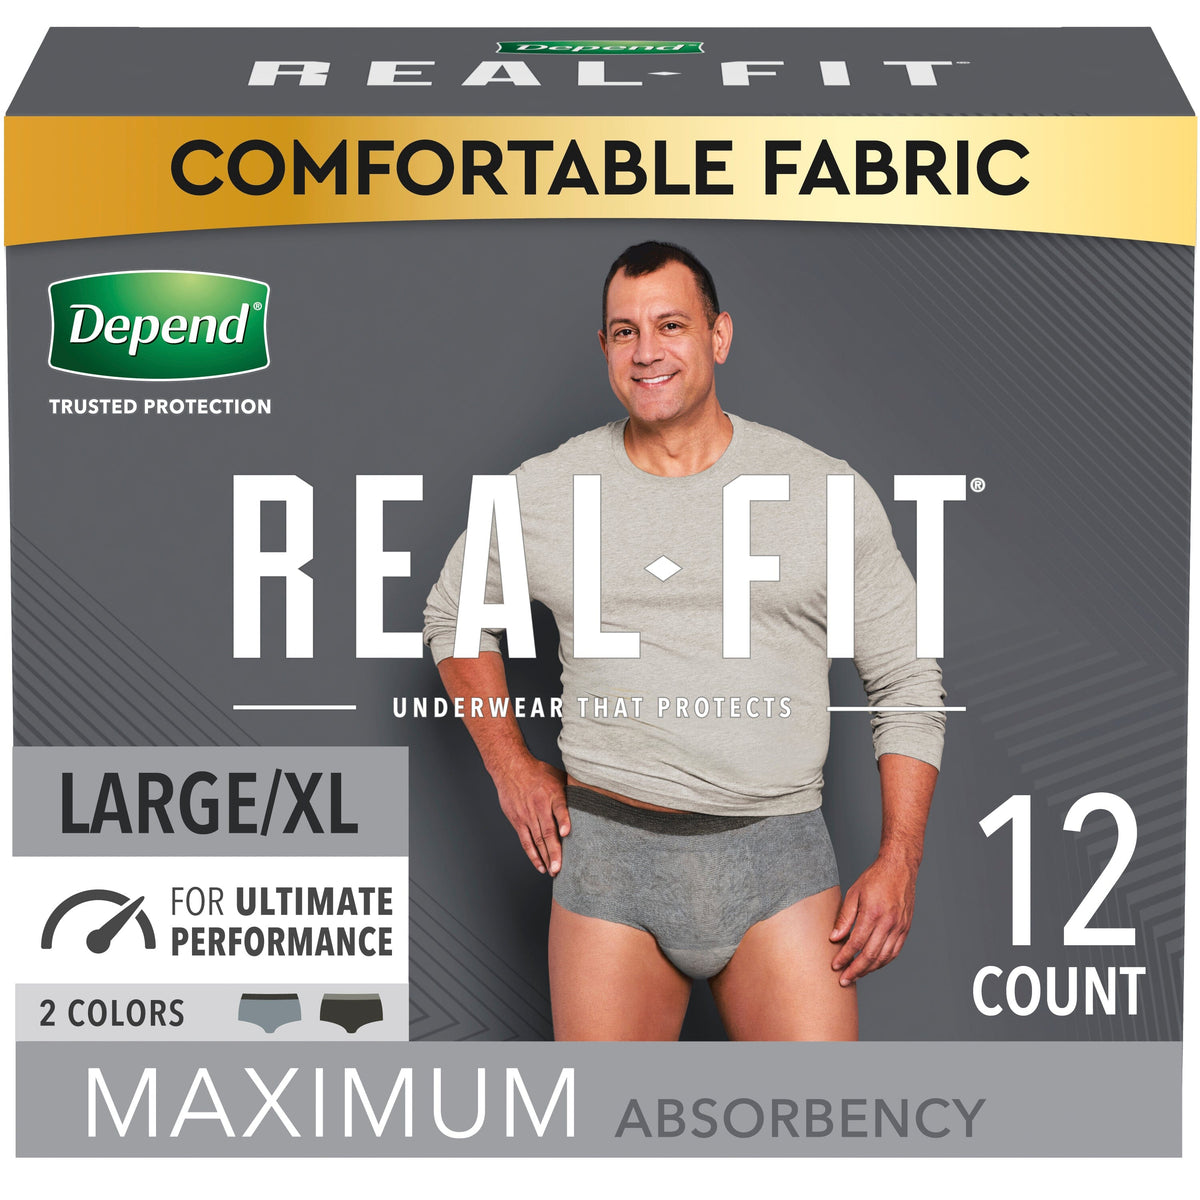 Unbranded* Assurance Underwear for Men LXL, 5 Pack Total 90 India